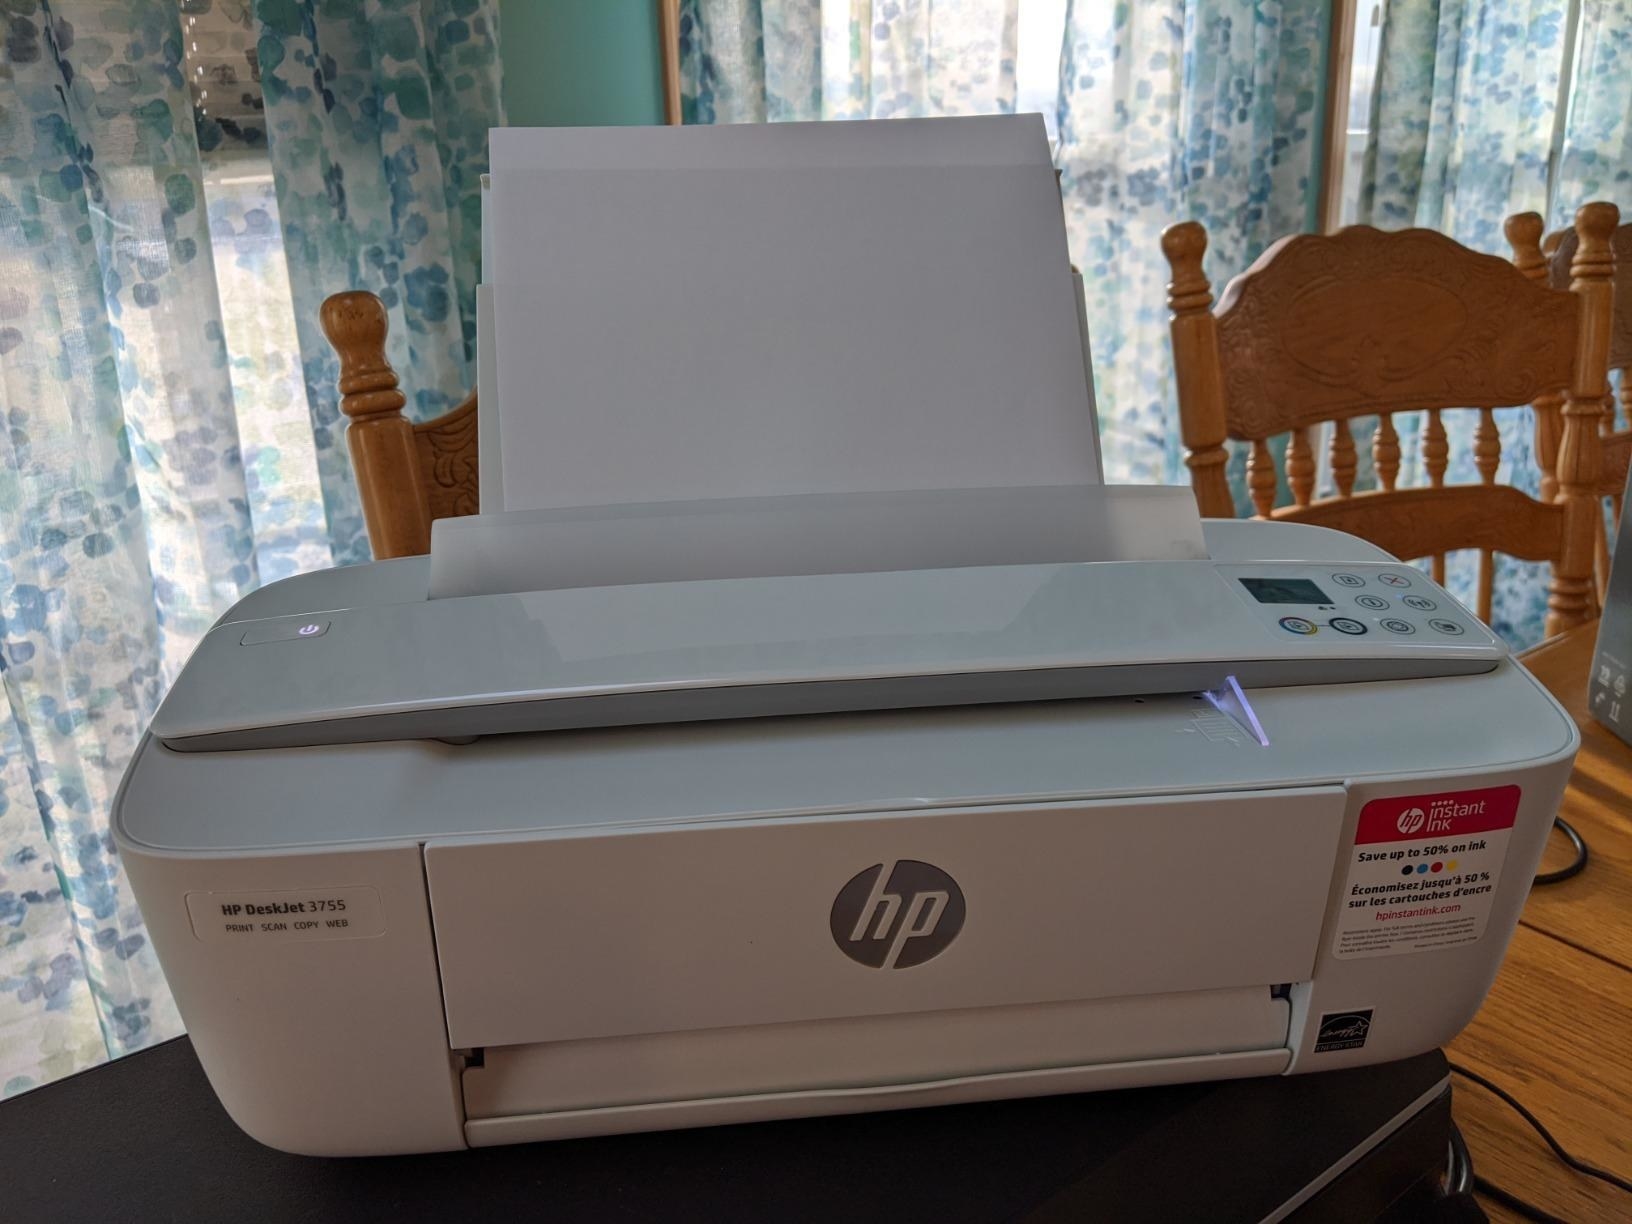 the white printer